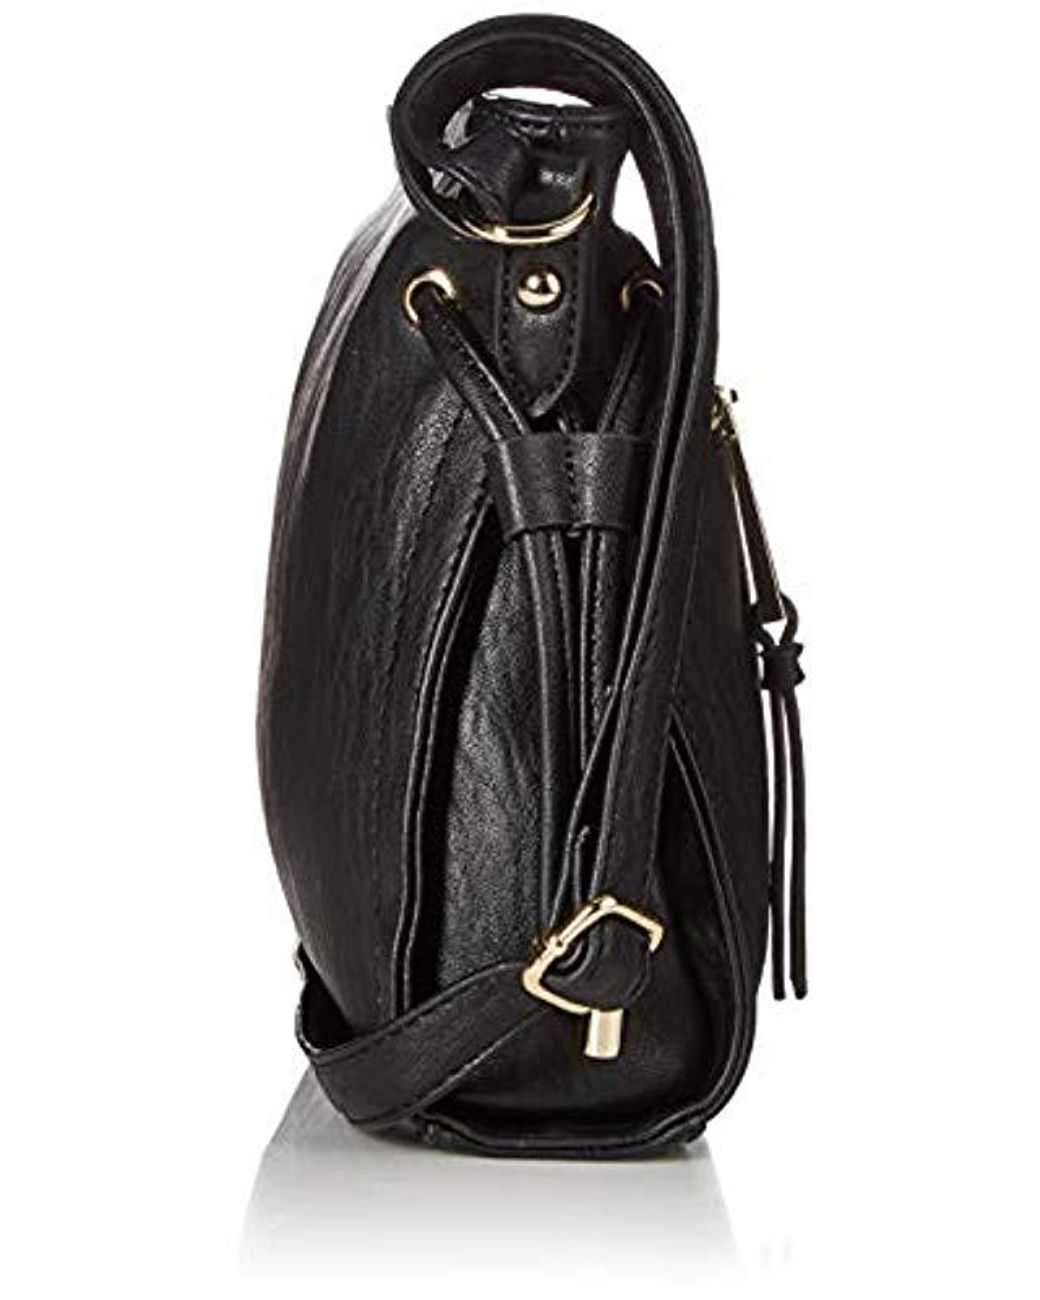 Jessica Simpson women's Astor crossbody bag purse